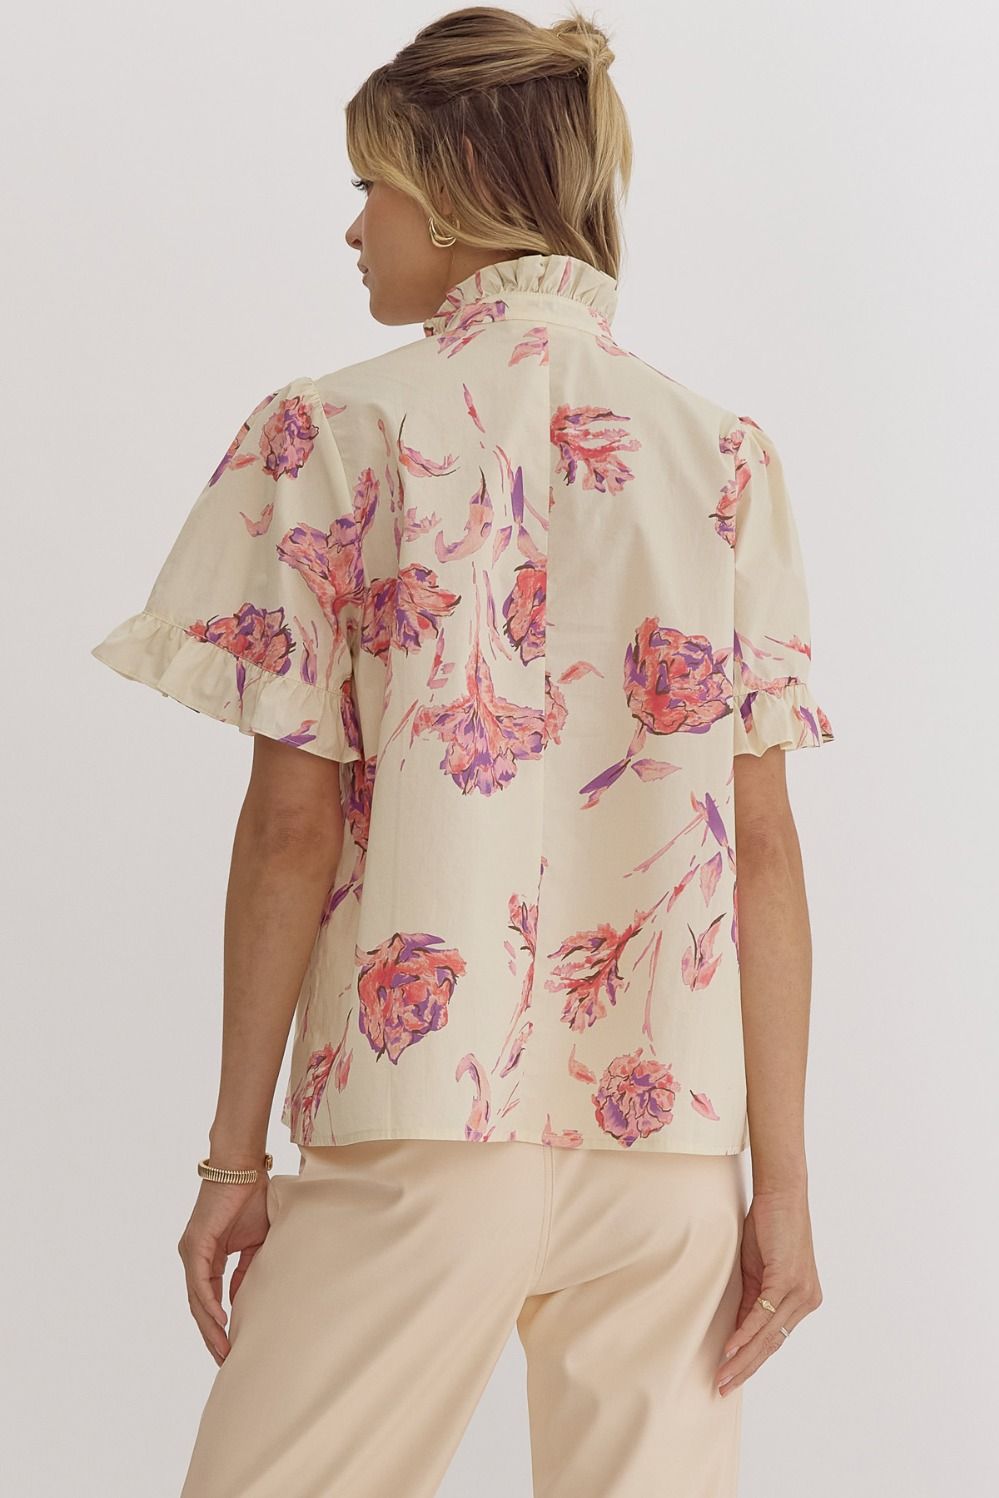 The Megan Floral Print Short sleeve top